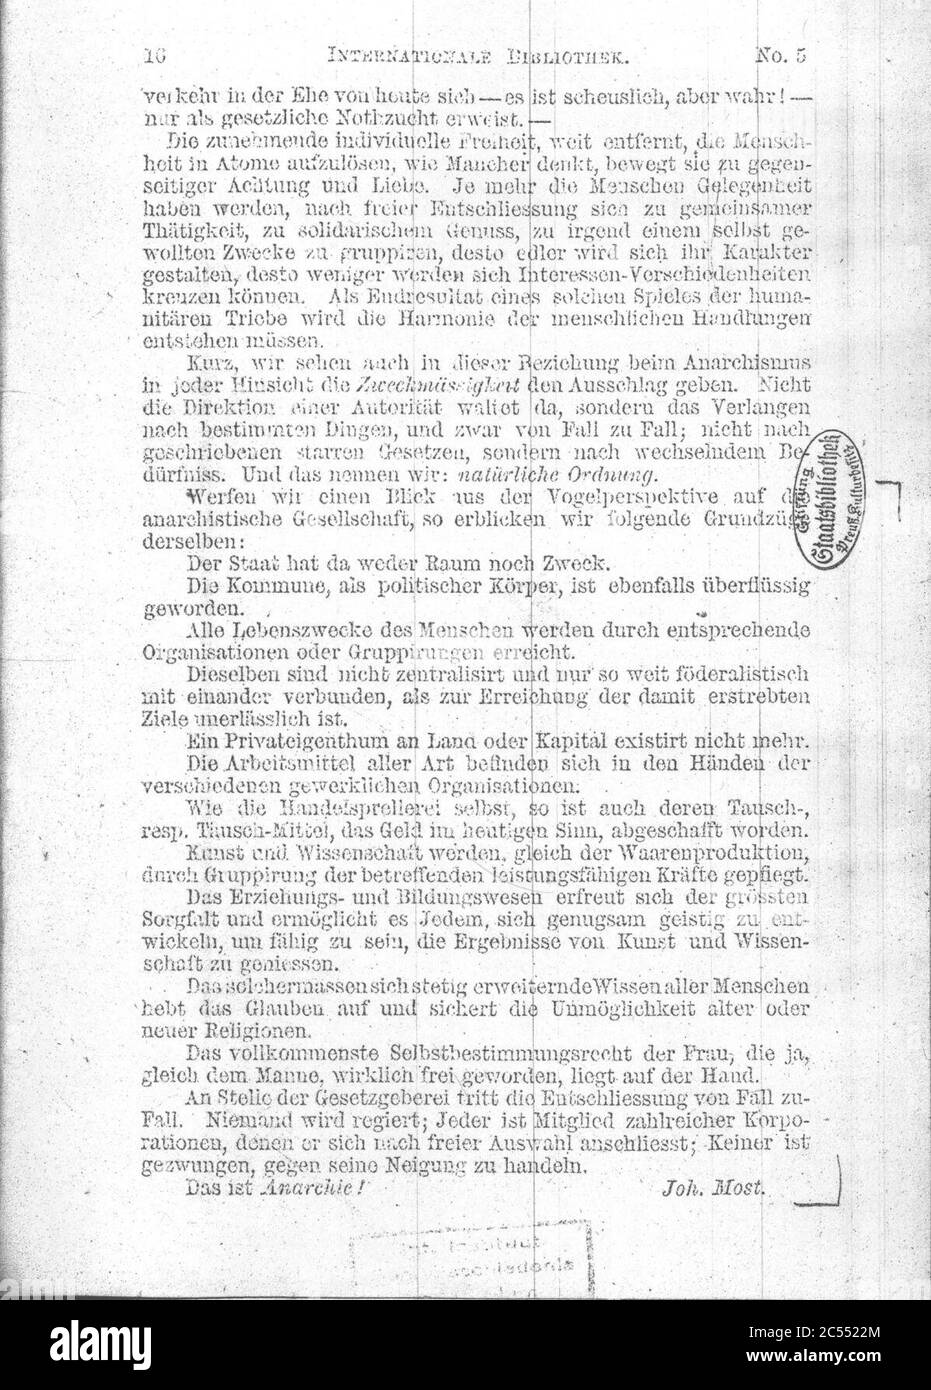 Internationale Bibliothek (Müller, New York, 1887-1891) Heft 05 Seite 16. Stock Photo